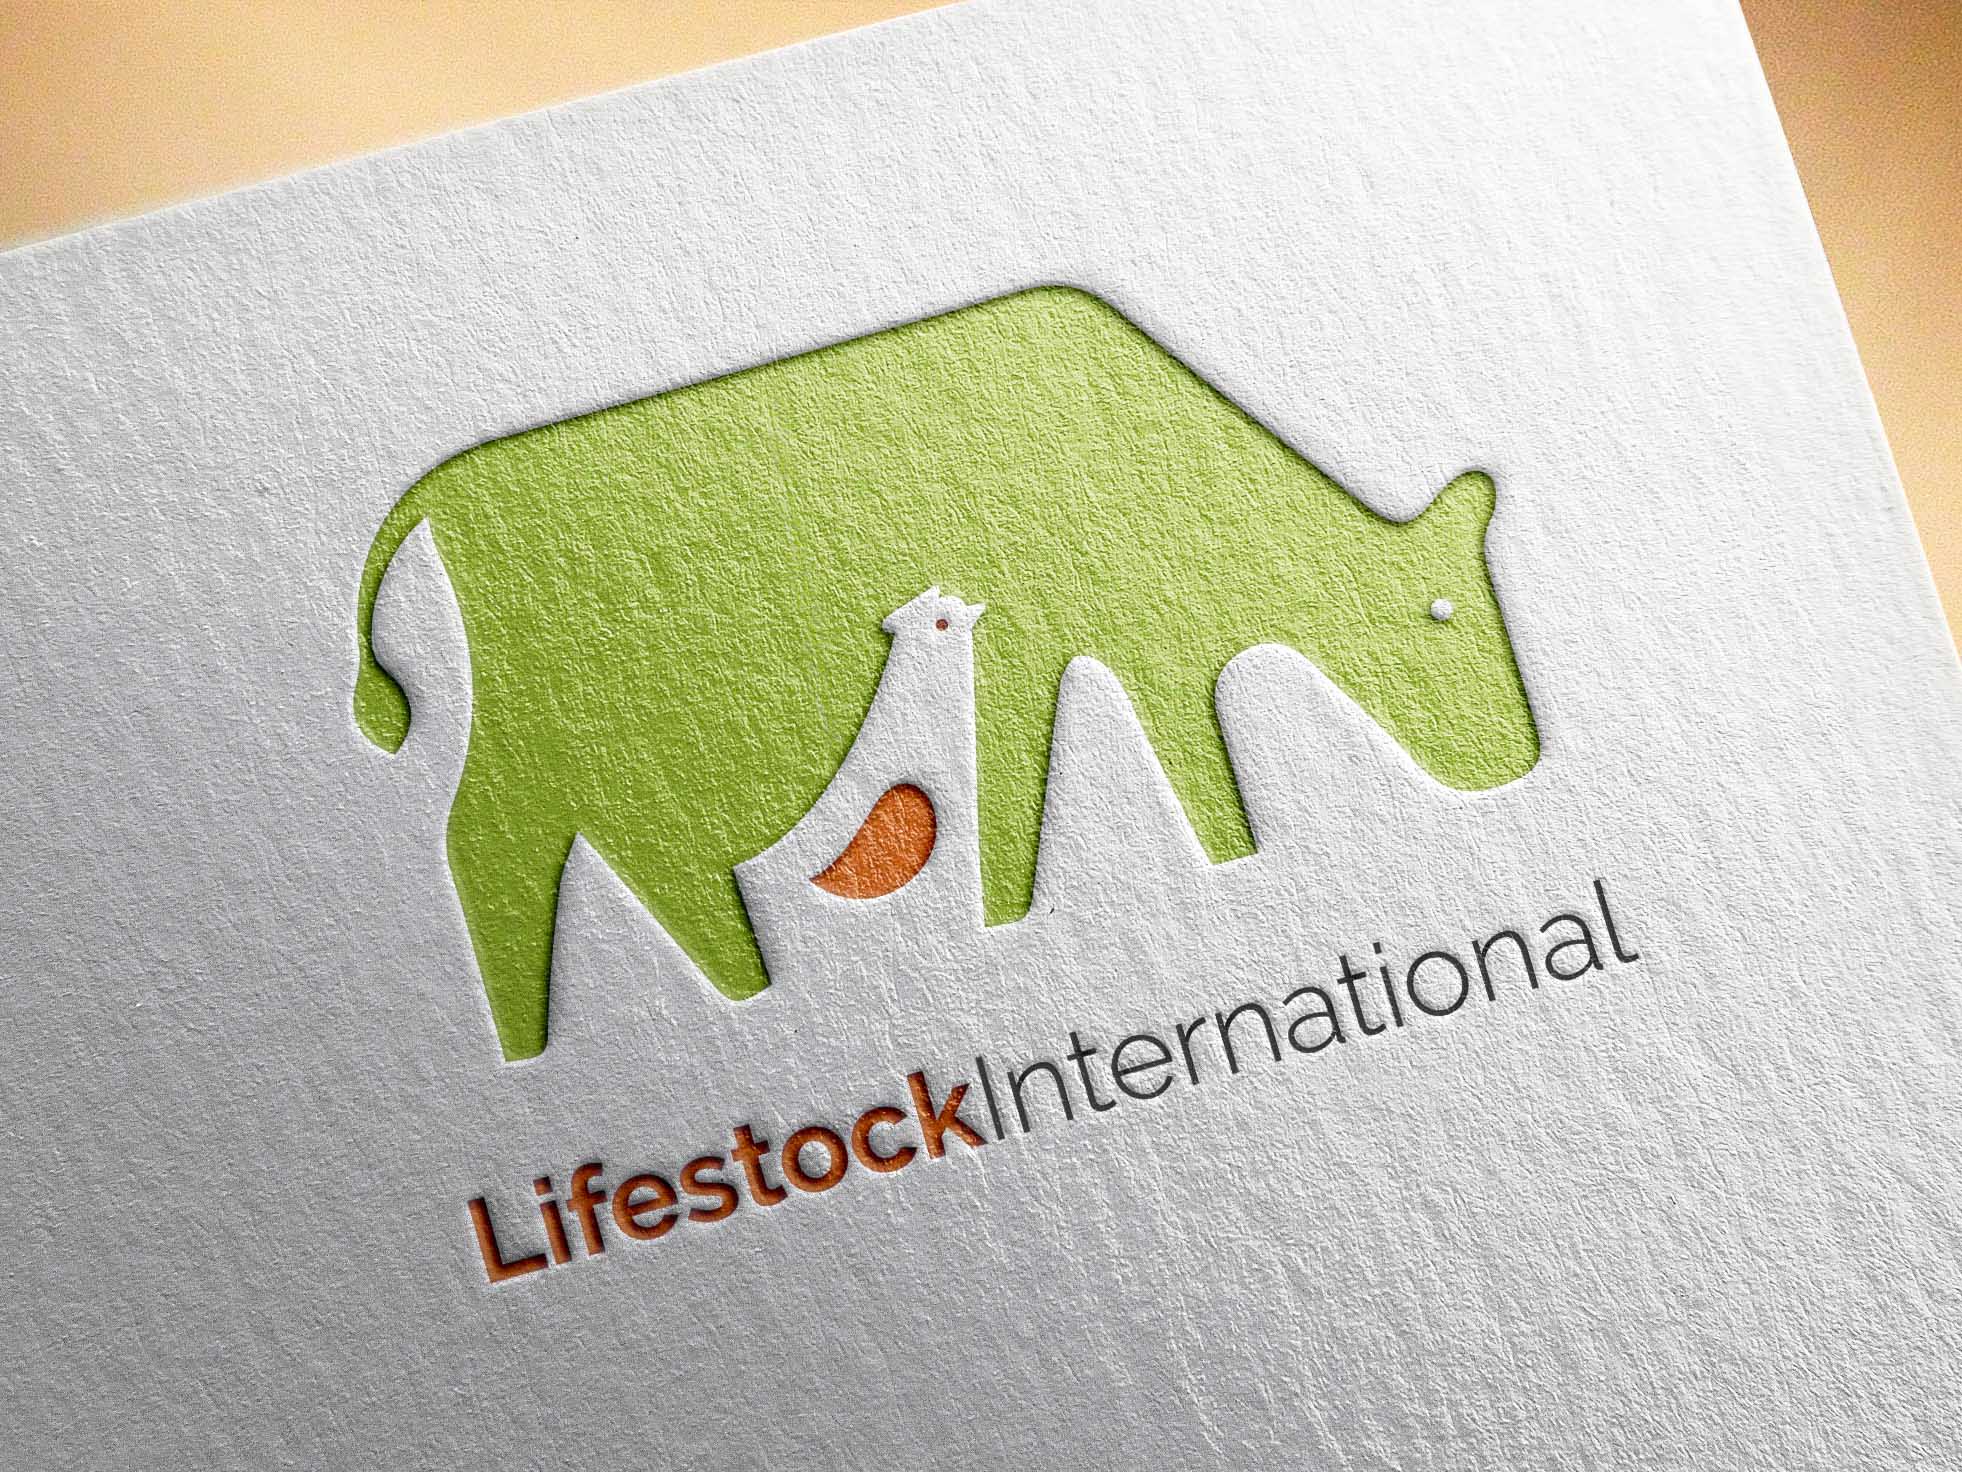 Lifestock International logo